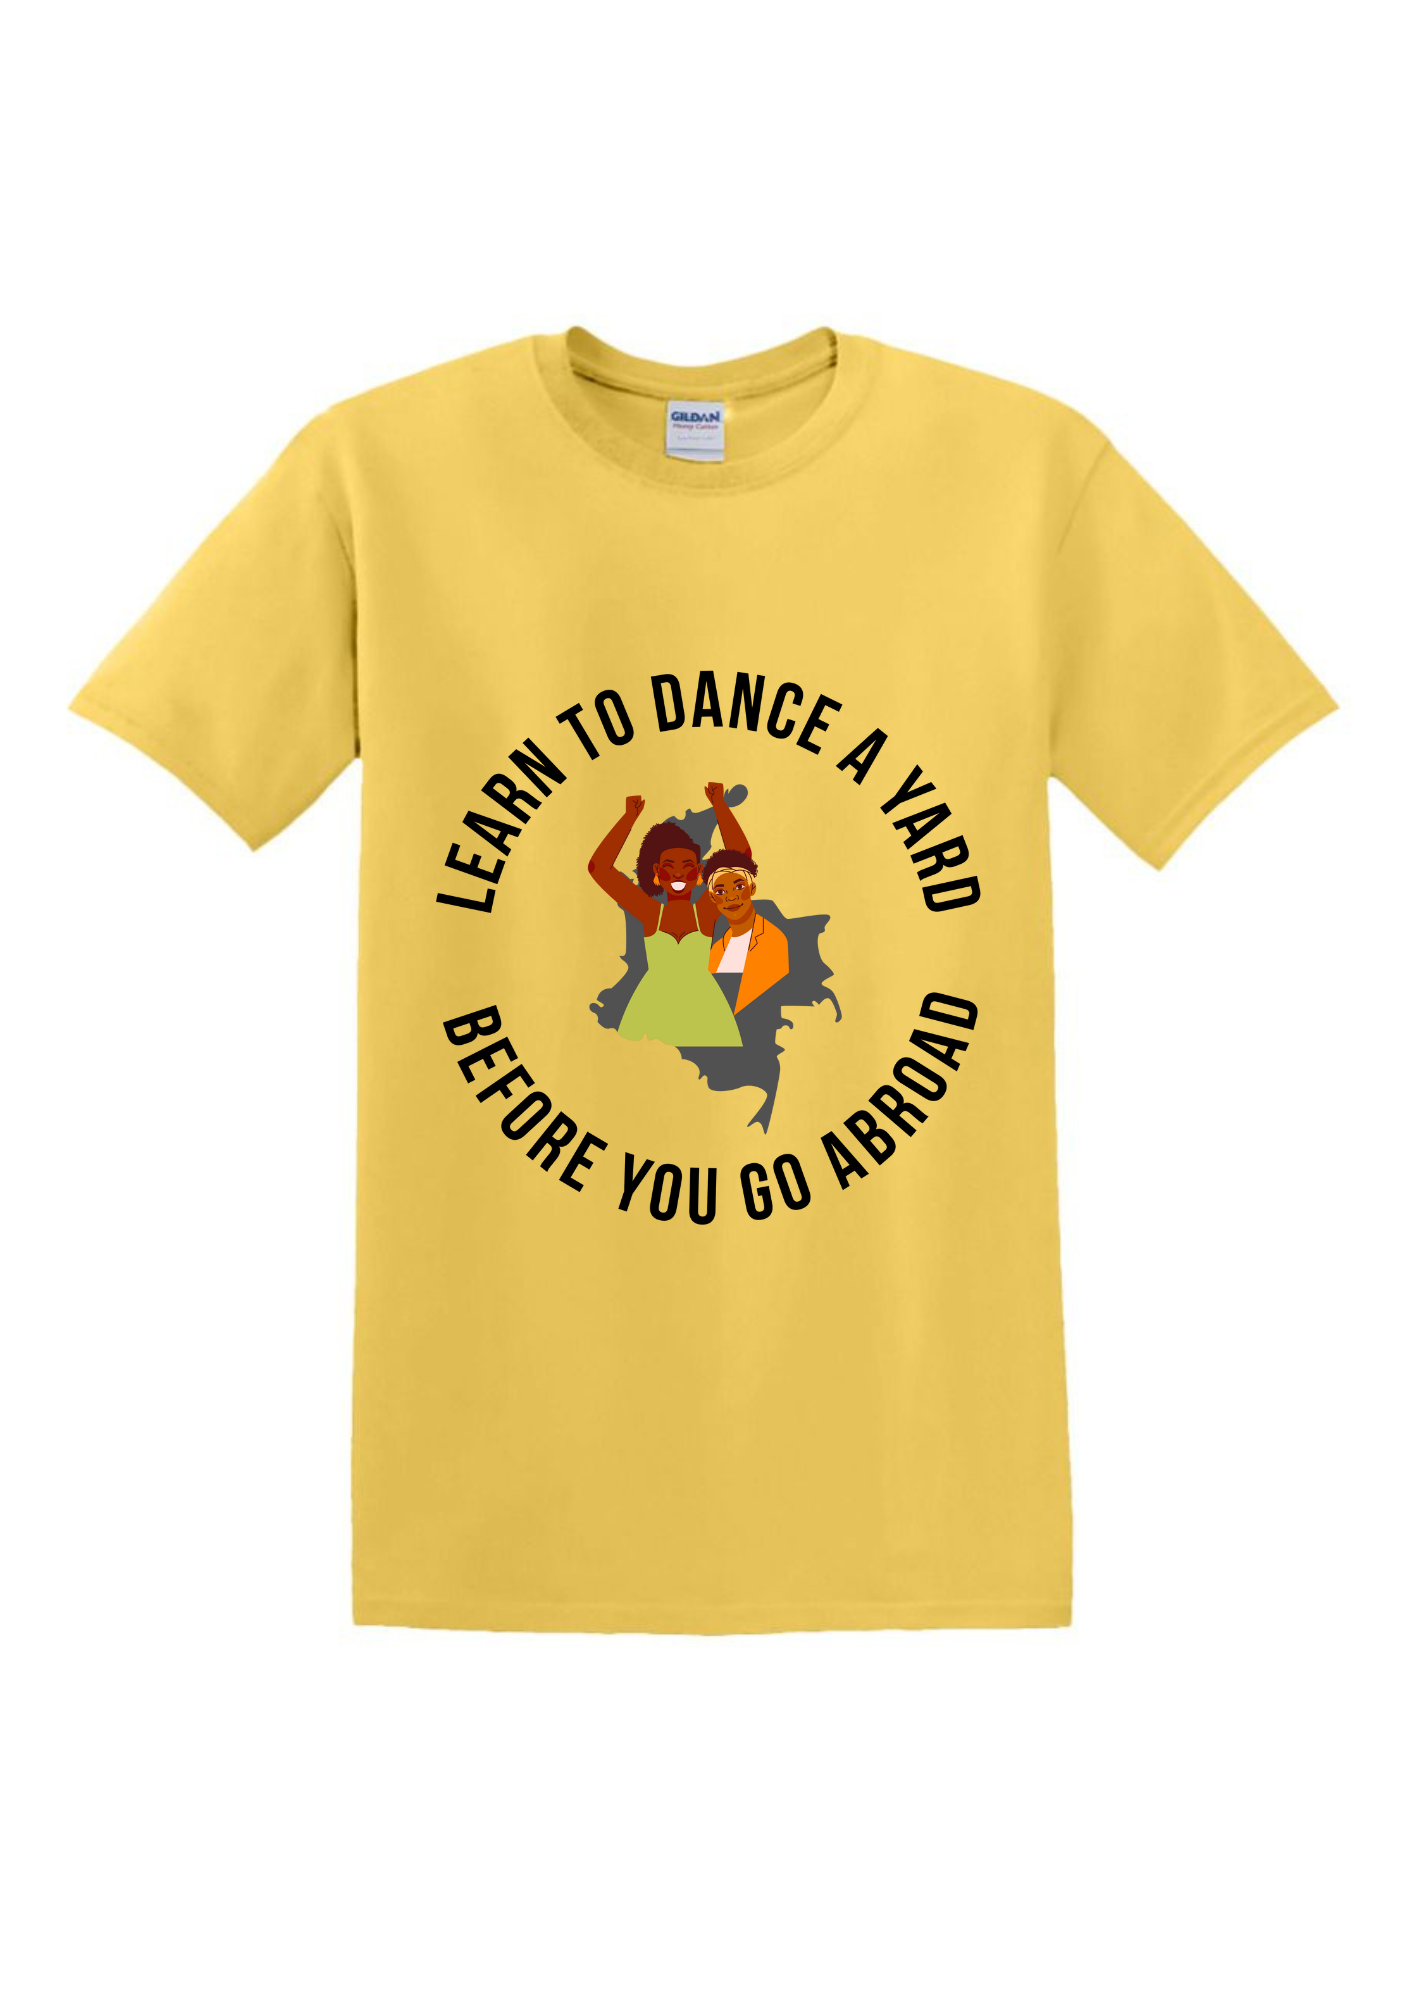 Learn to Dance T-Shirt